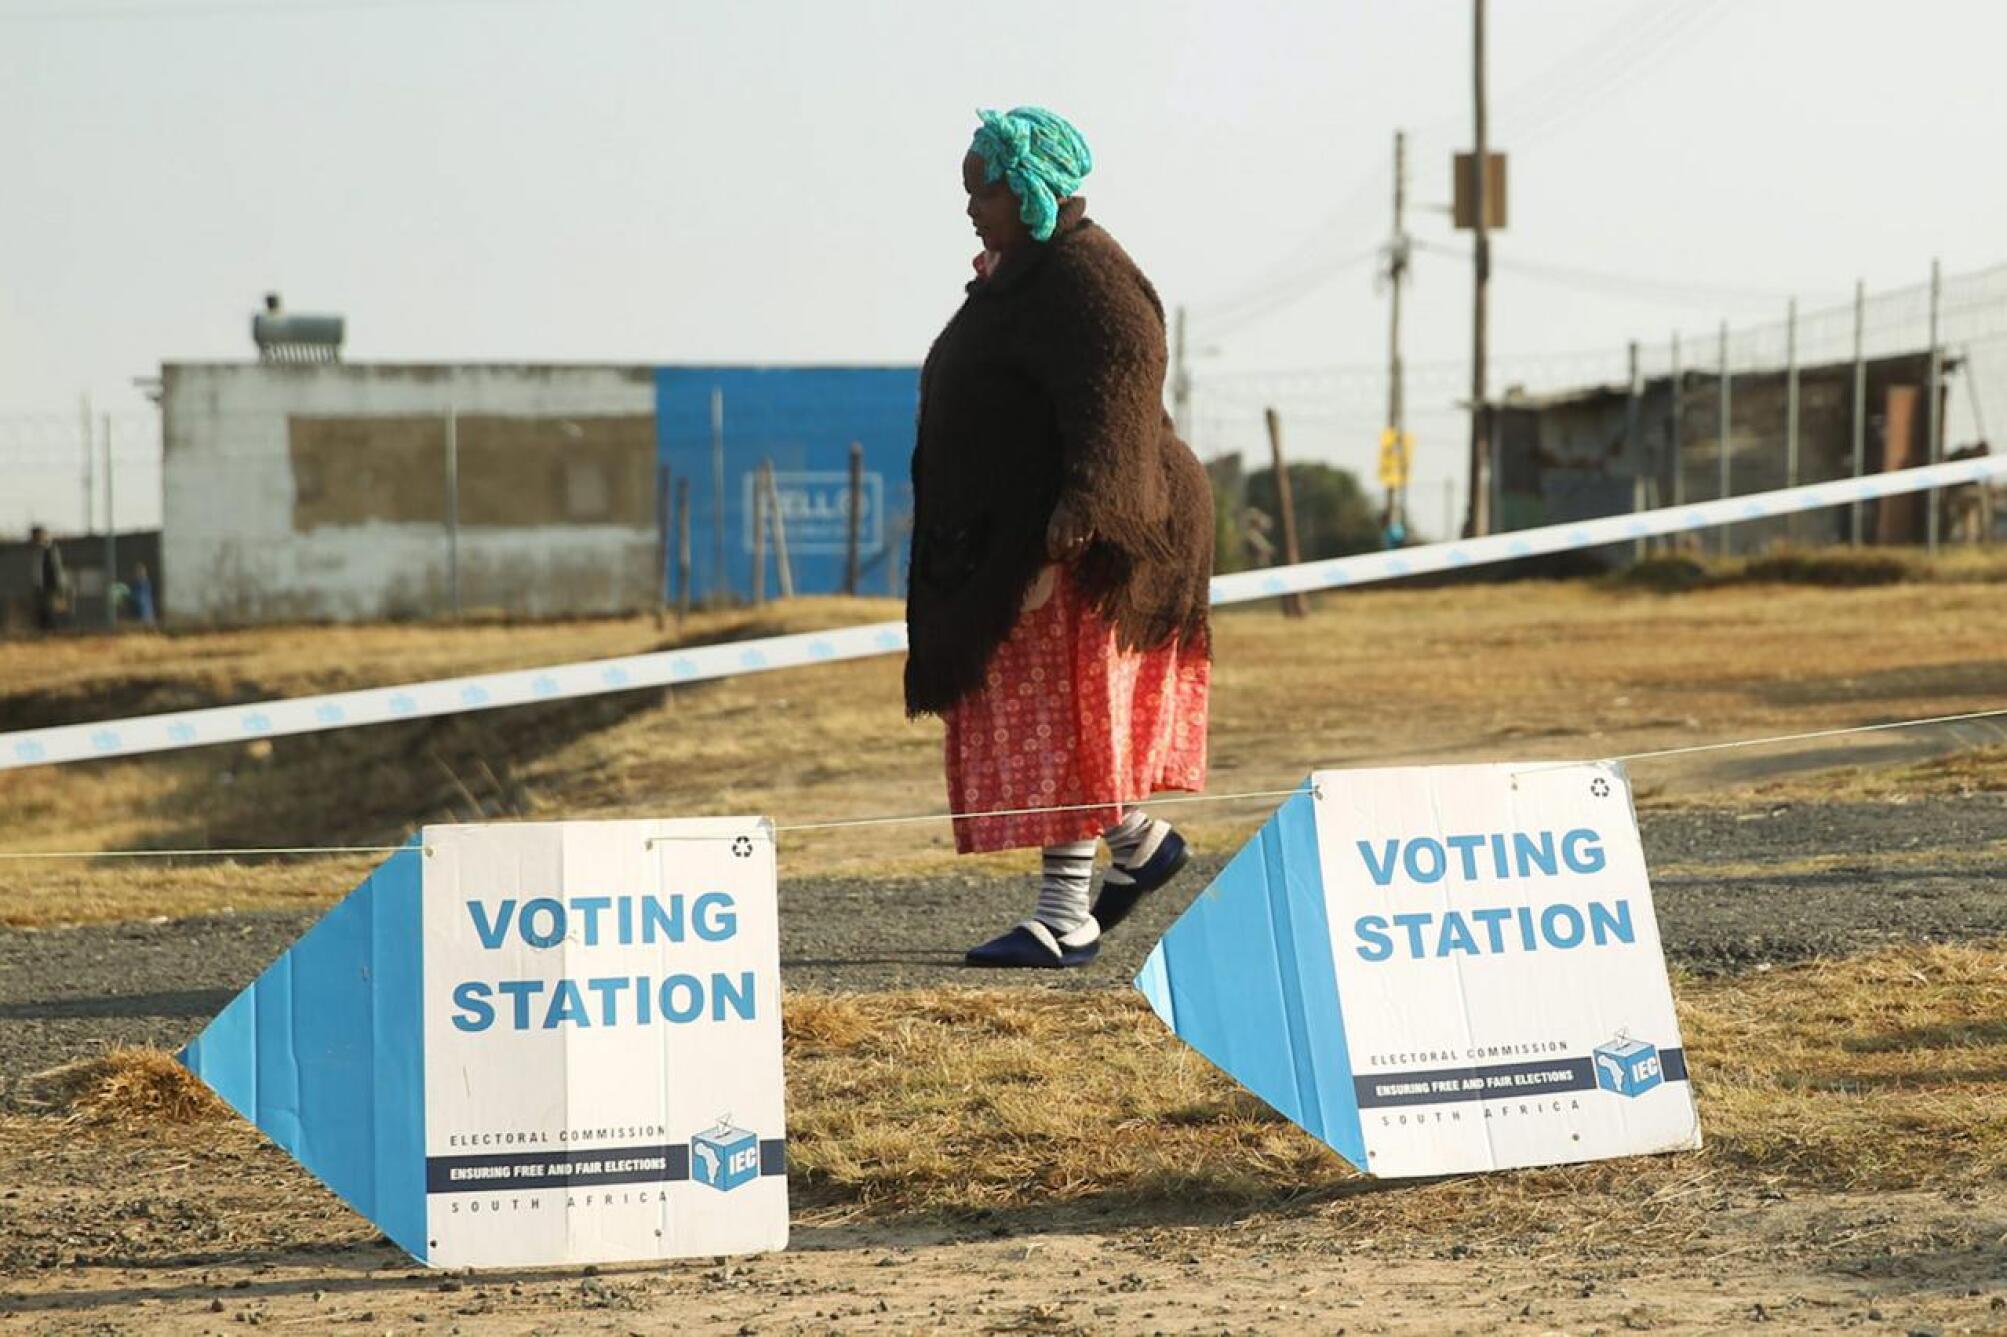 A woman woman a voting station